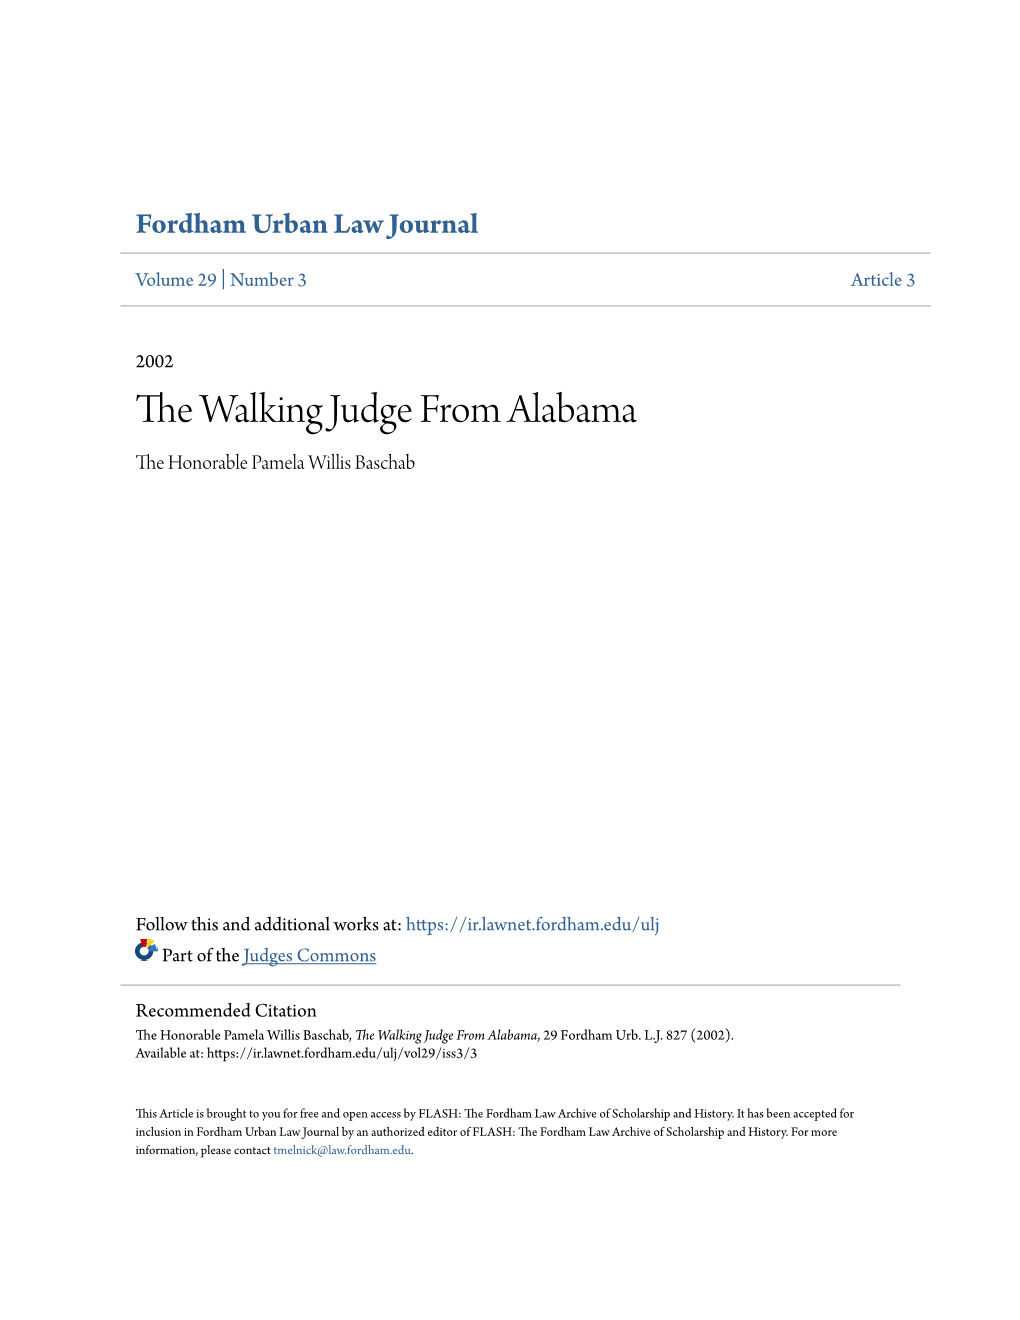 The Walking Judge from Alabama, 29 Fordham Urb